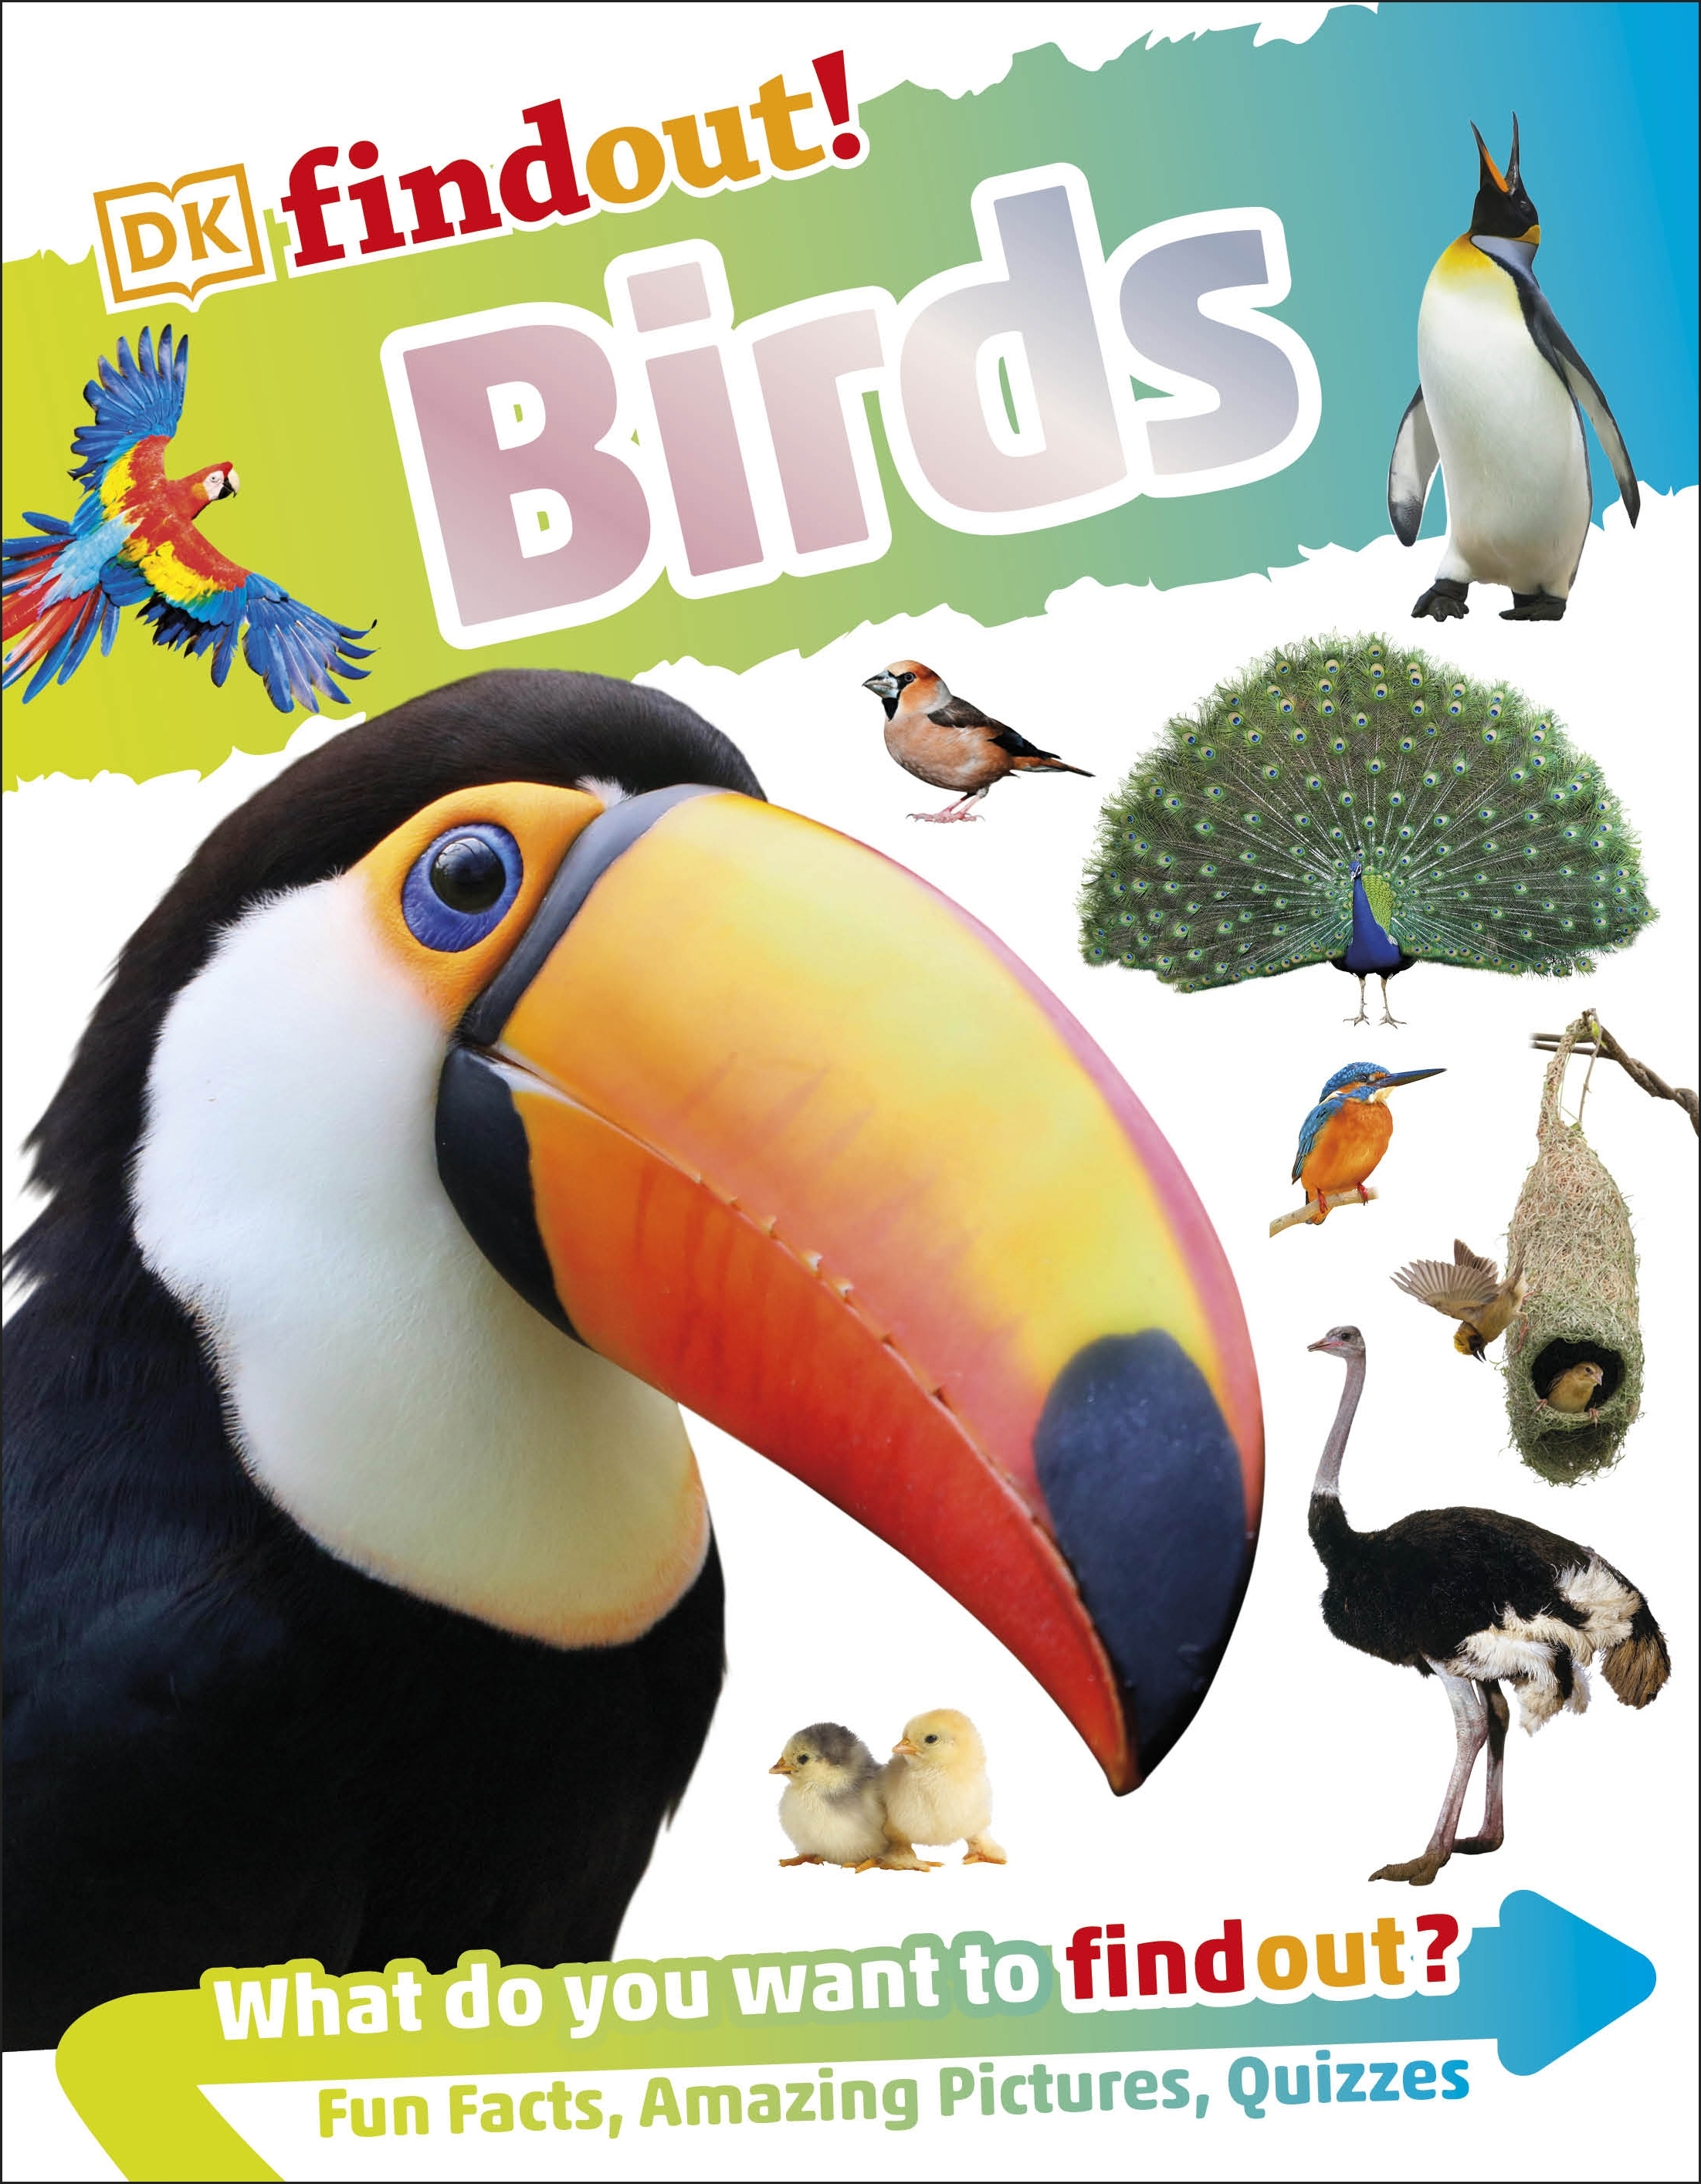 Dkfindout Birds By Dk Penguin Books Australia 